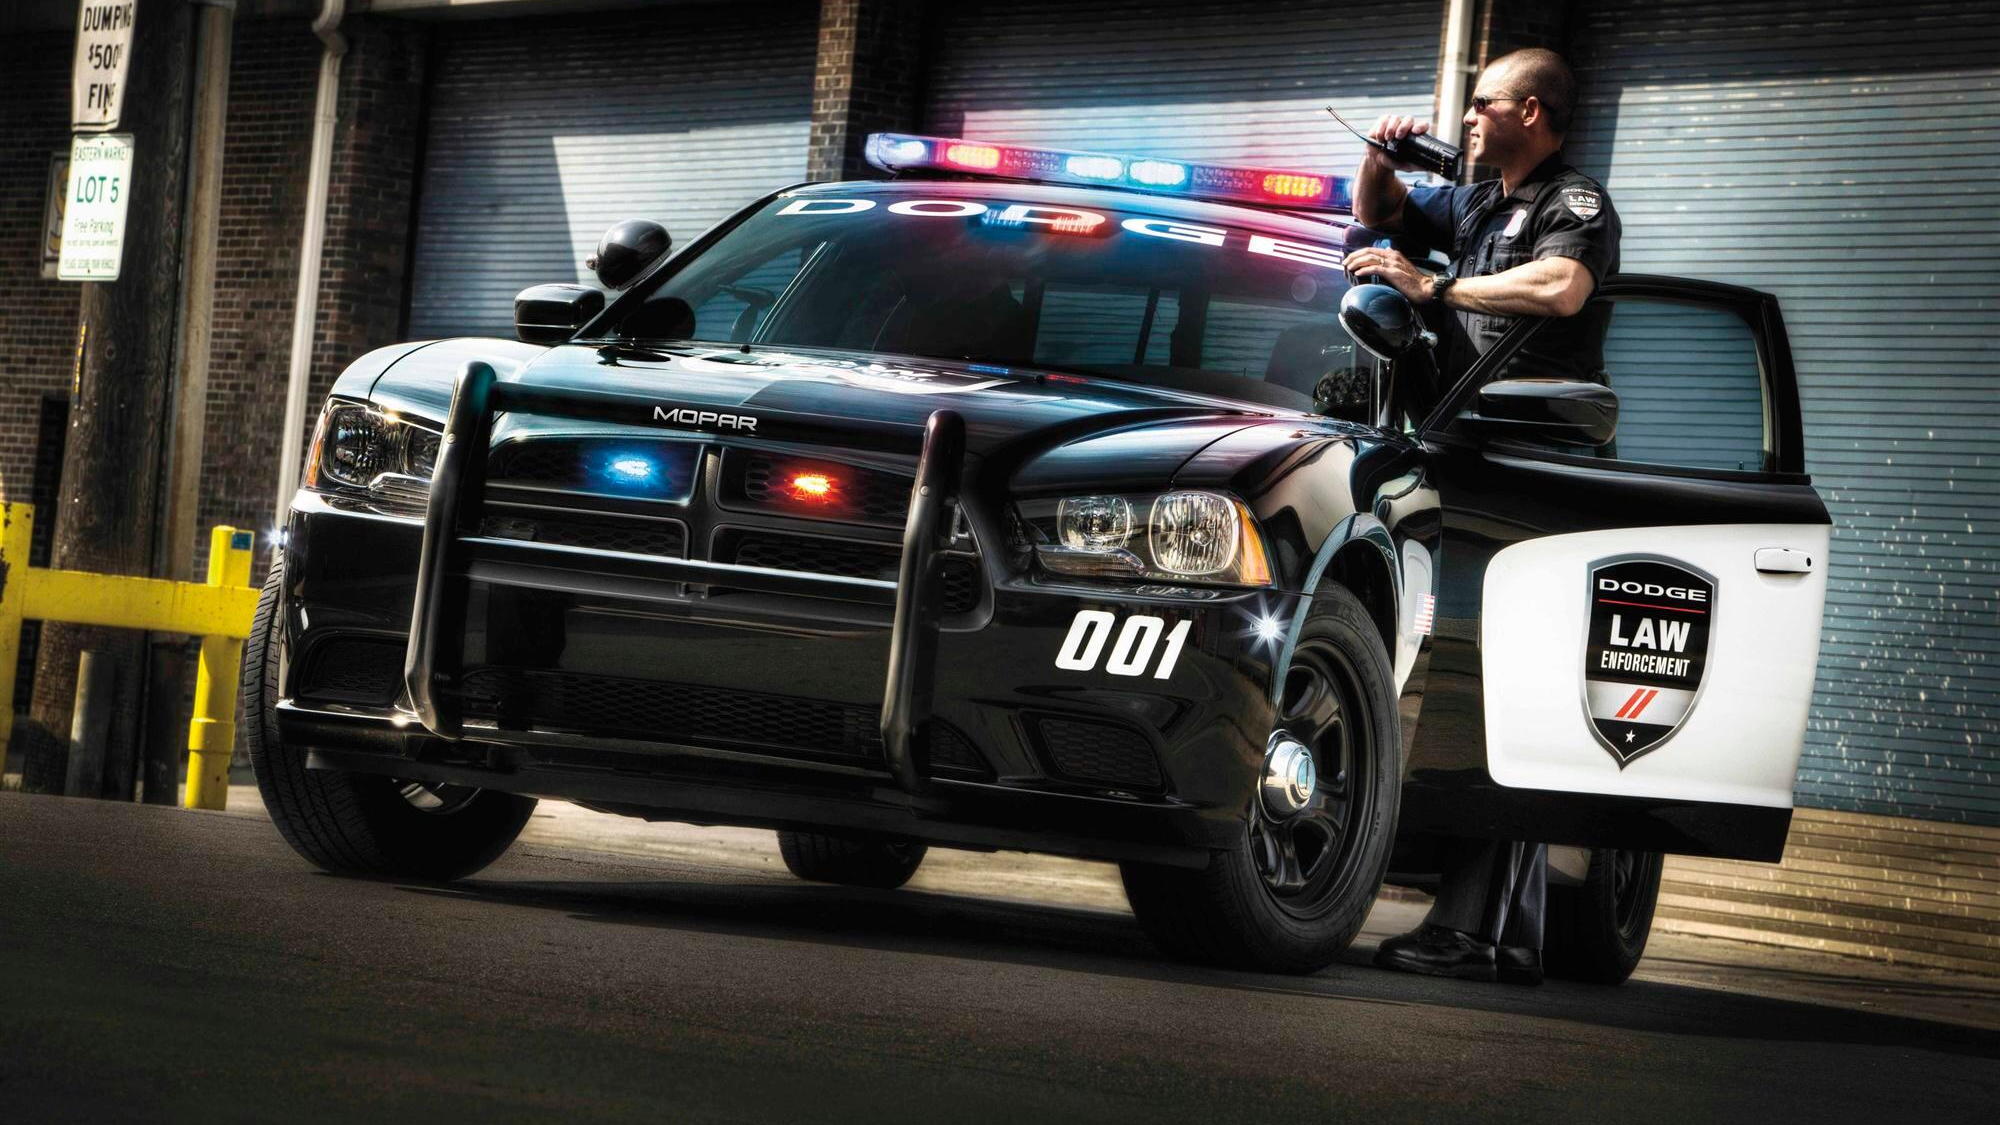 2012 Dodge Charger Pursuit police car